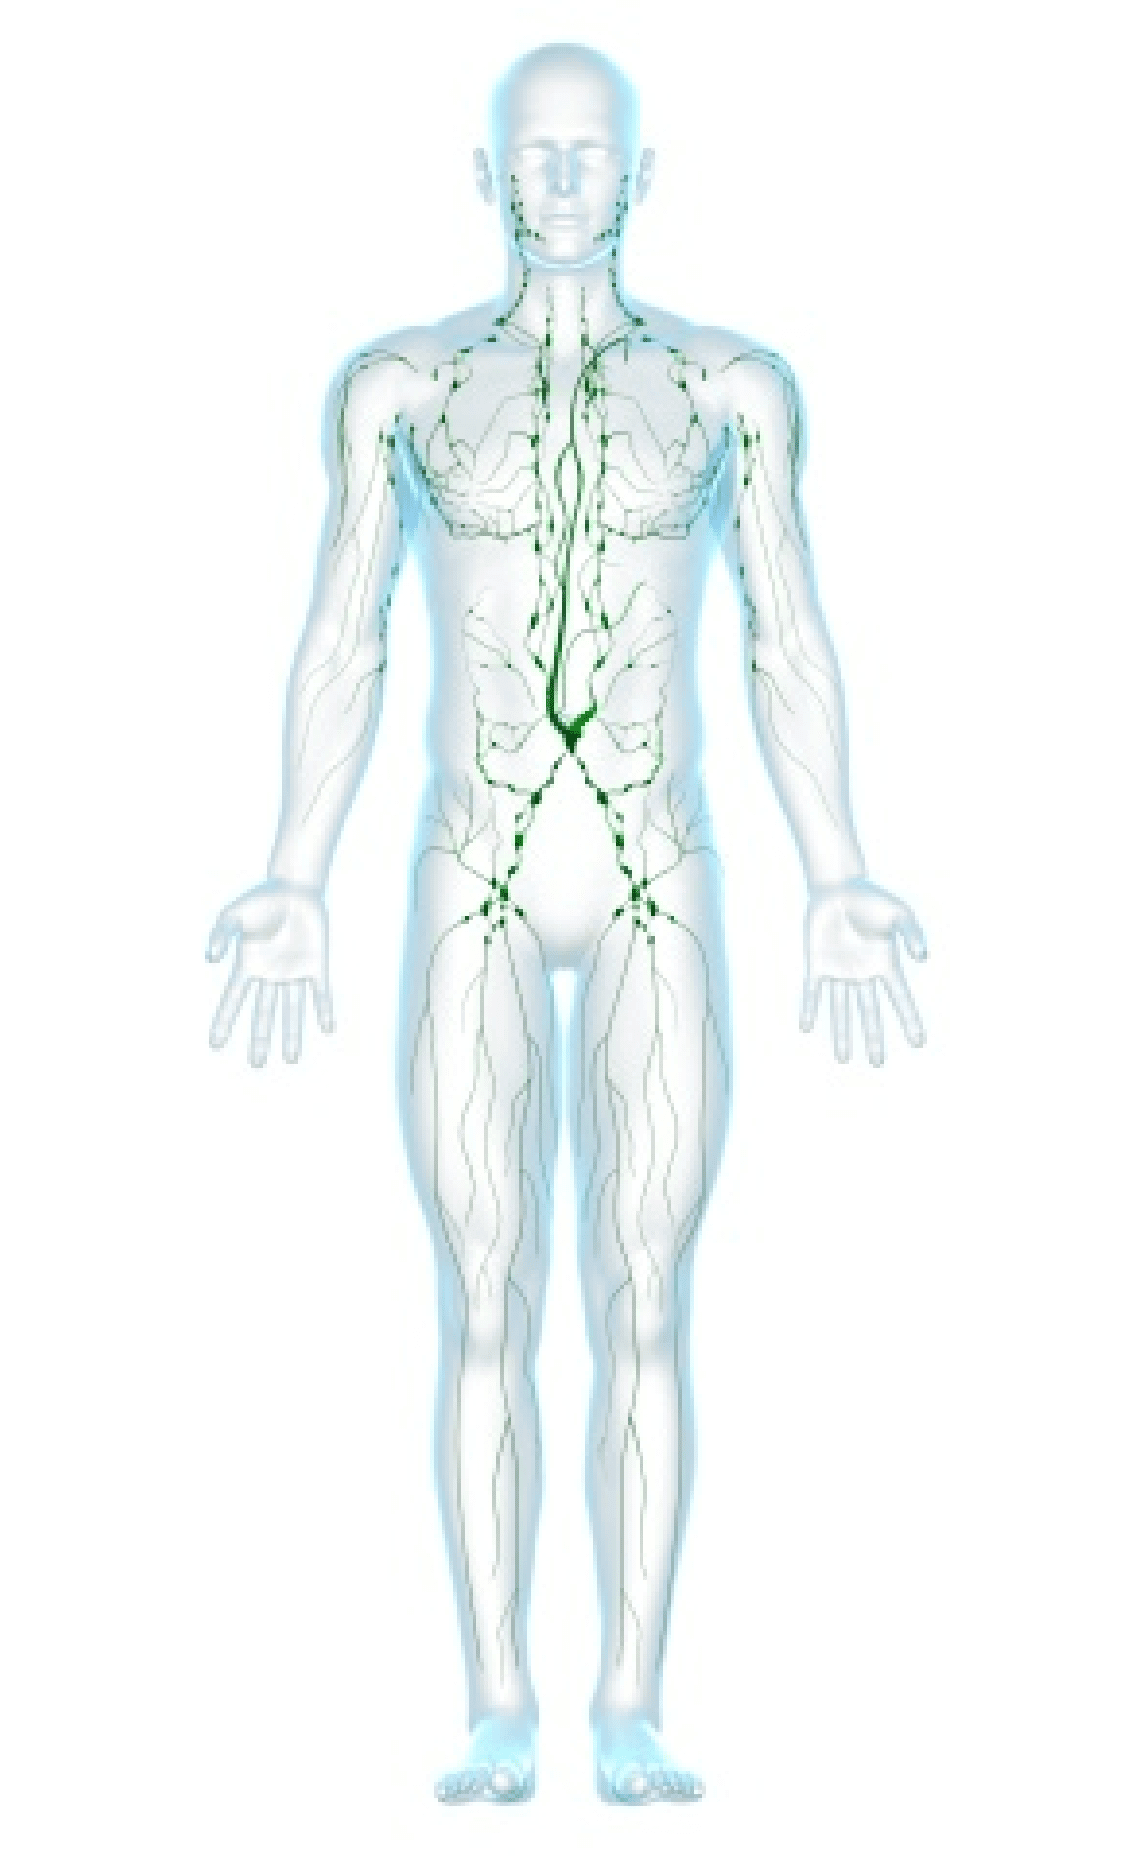 Lymphatic system illustration